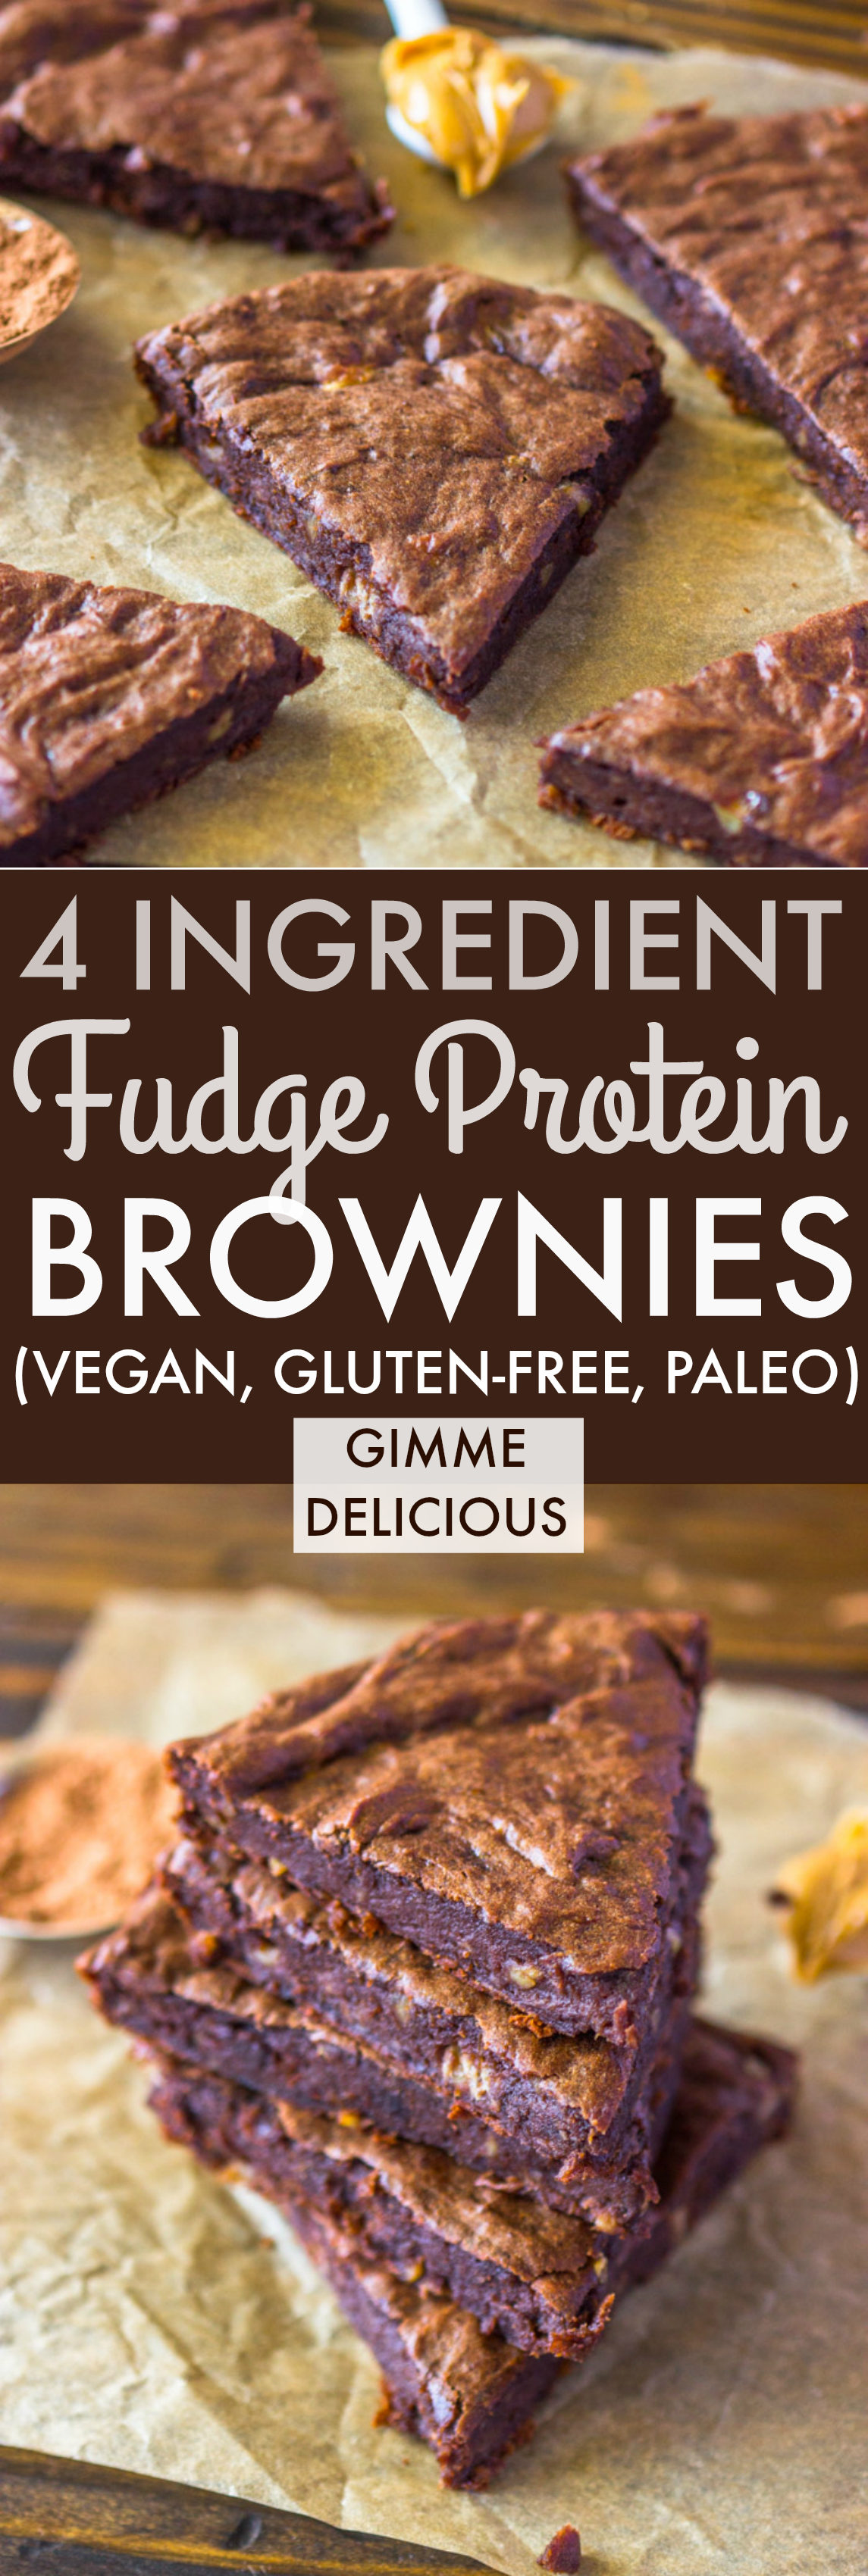 4 Ingredient Fudge Protein Brownies (Vegan, Gluten-free, Paleo)